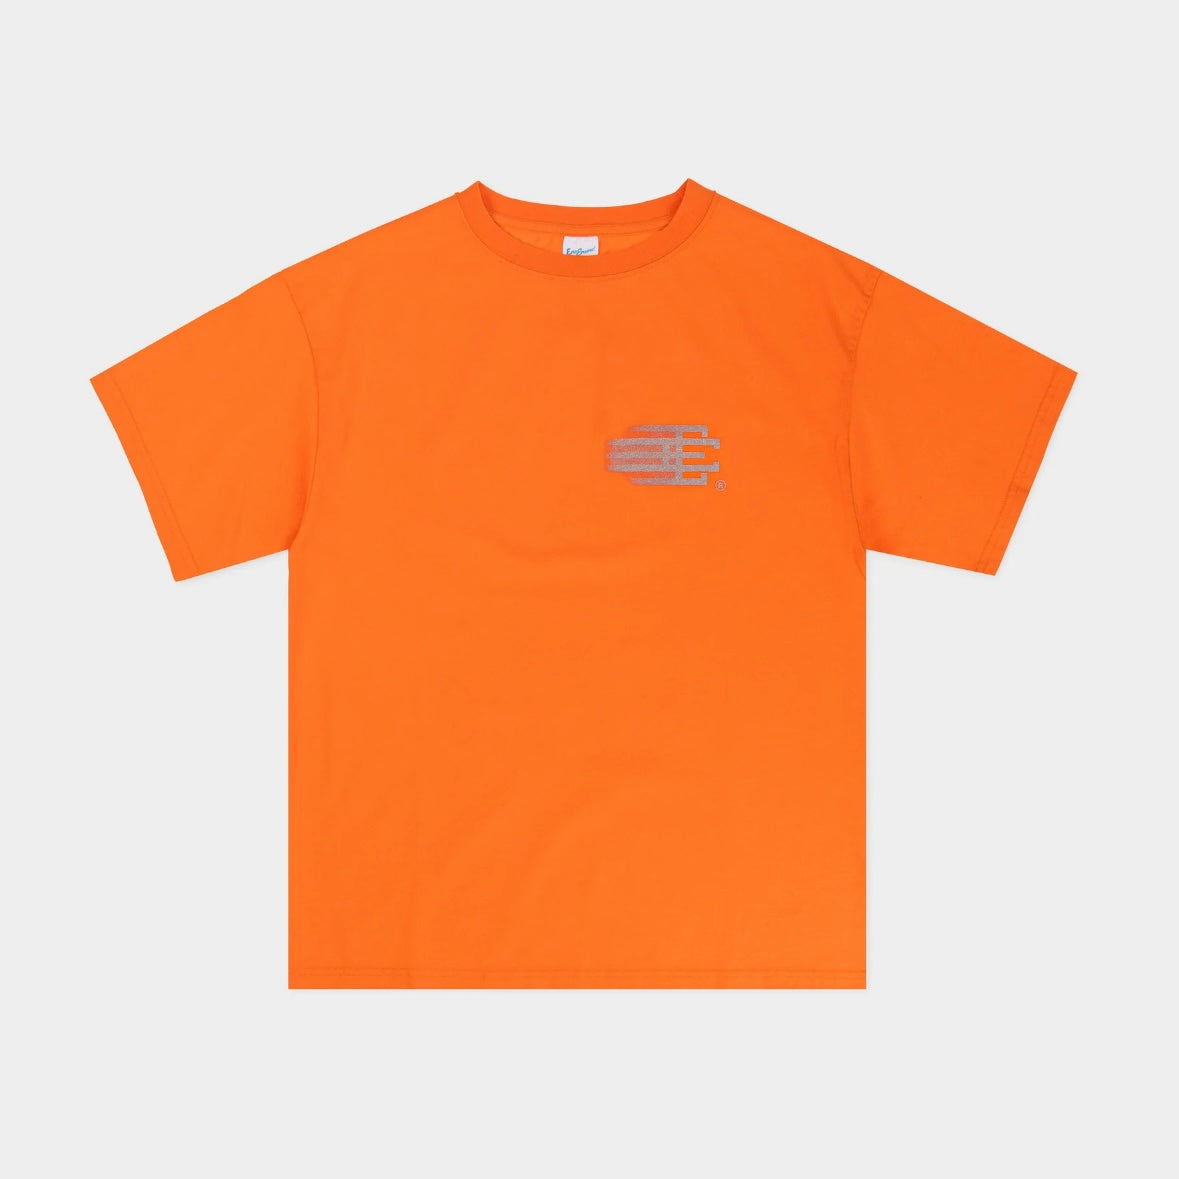 Eric Emanuel Motion Reflective Neon Orange T-Shirt